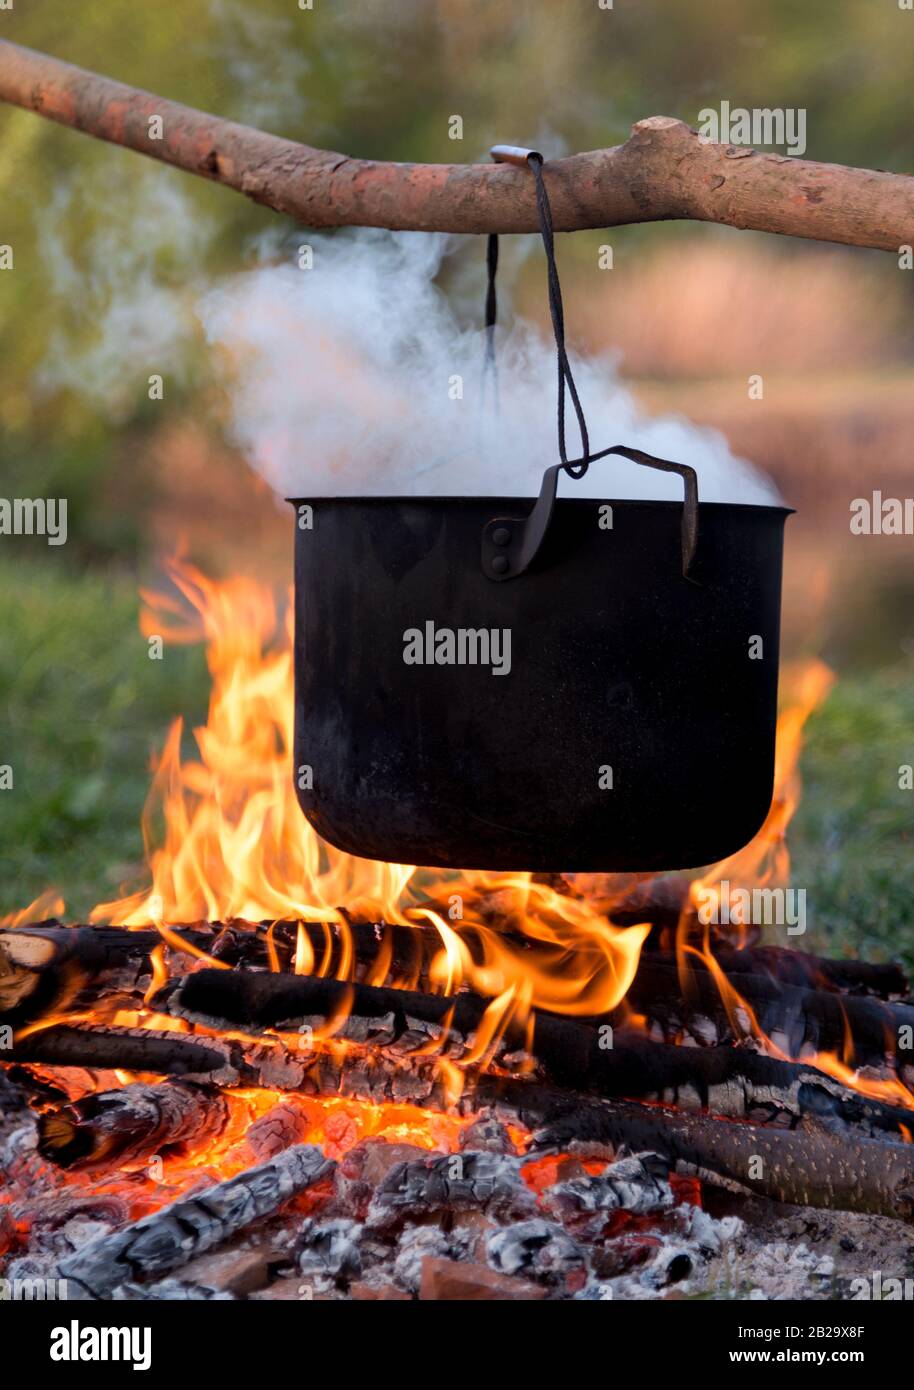 https://c8.alamy.com/comp/2B29X8F/black-pot-are-heating-under-fire-scene-from-travel-2B29X8F.jpg